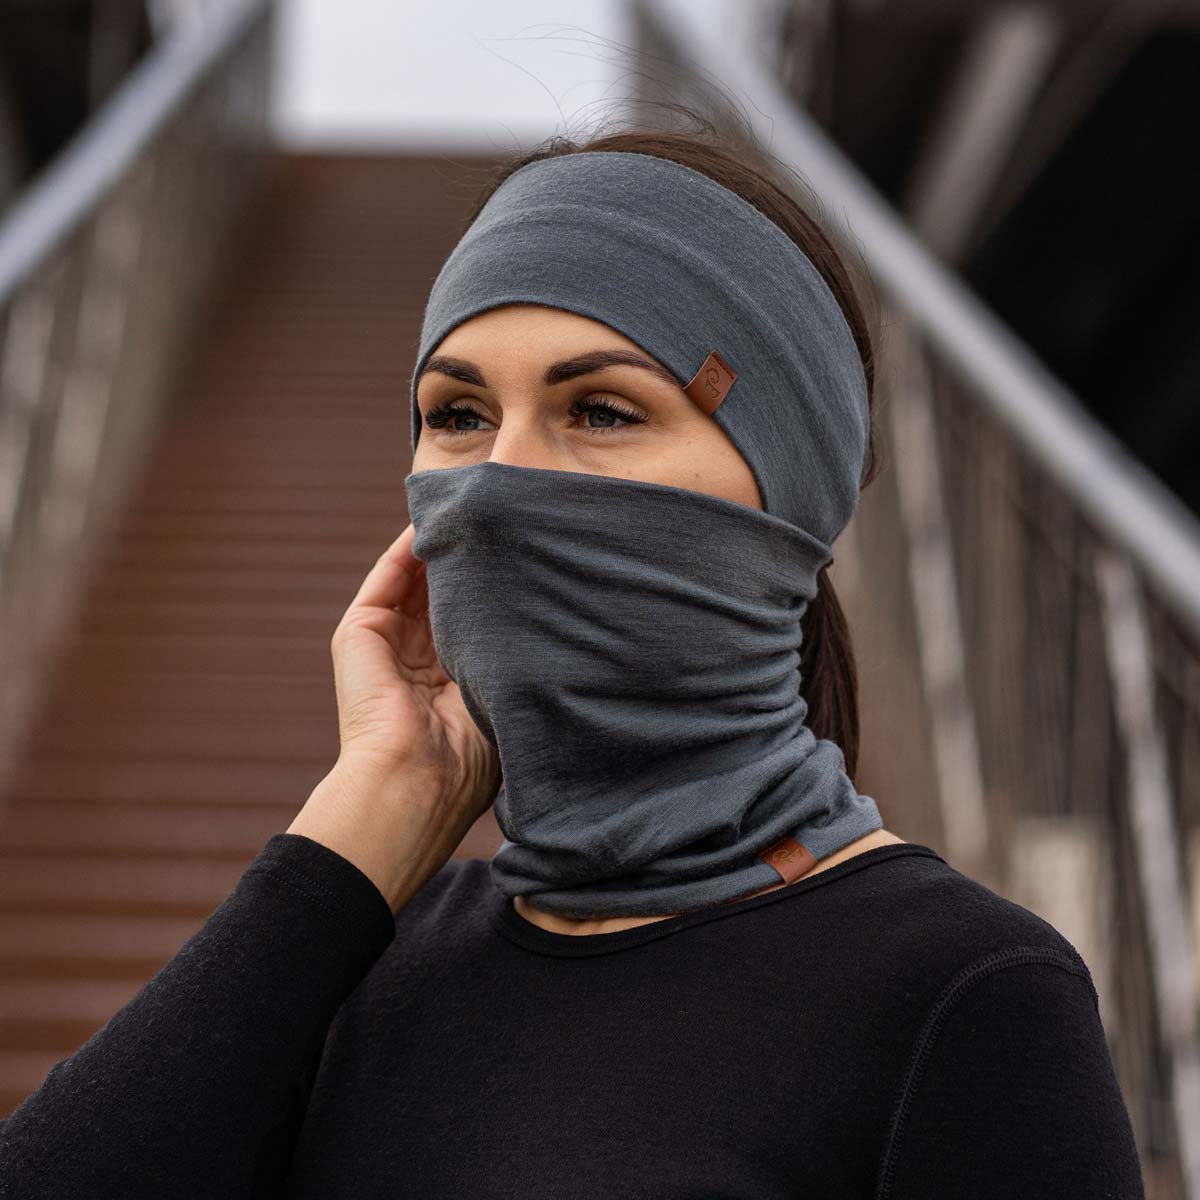 Women's Merino Wool Breathable Neck Gaiter * Windproof Warm Face Mask Tube  Black